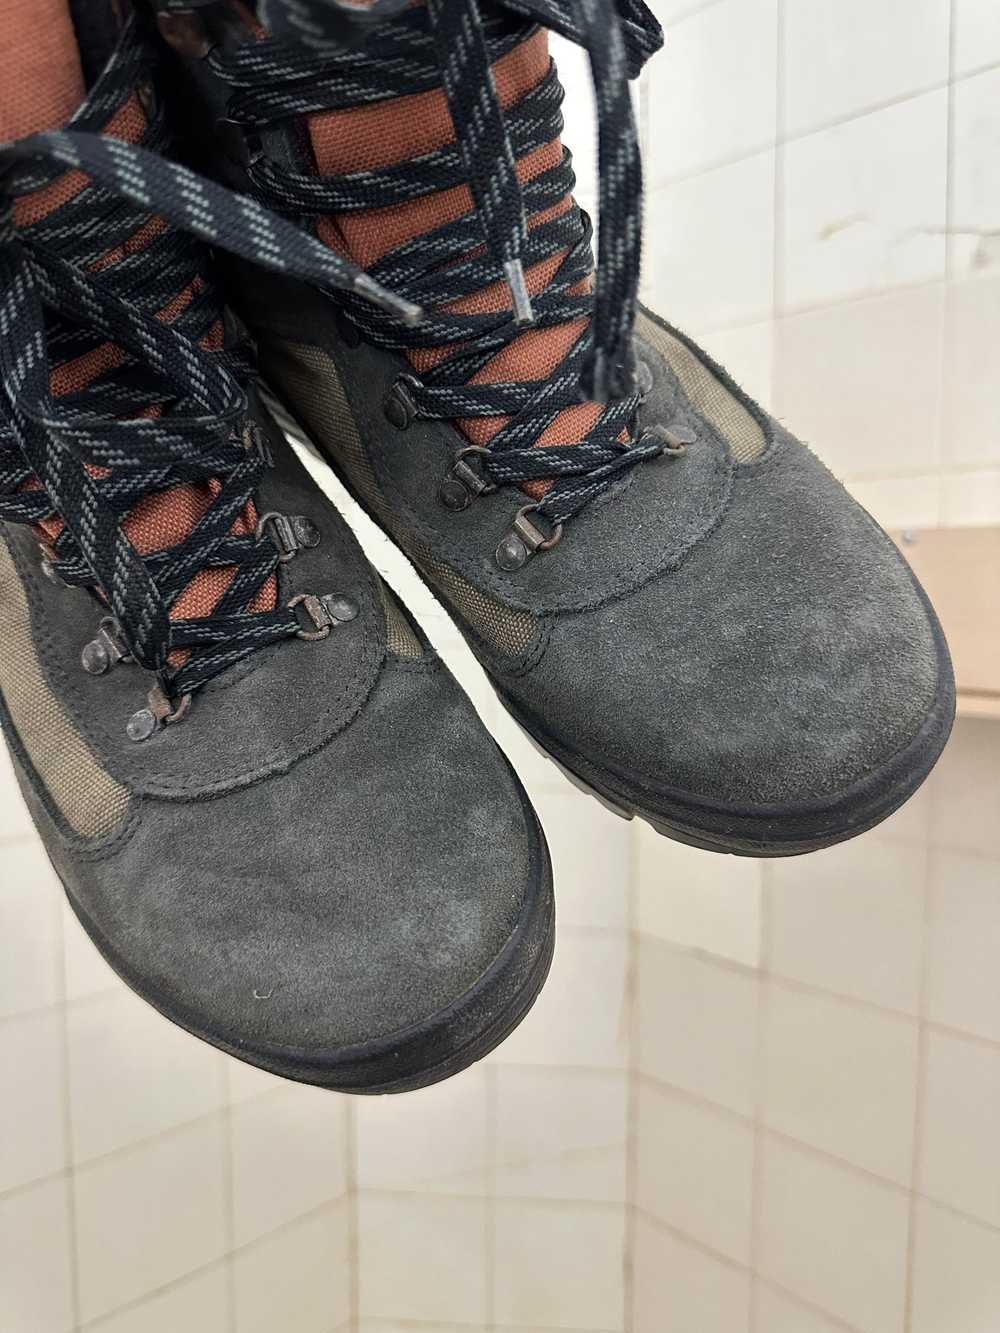 1990s Salomon Goretex D-Ring Hiking Boots - Size … - image 4